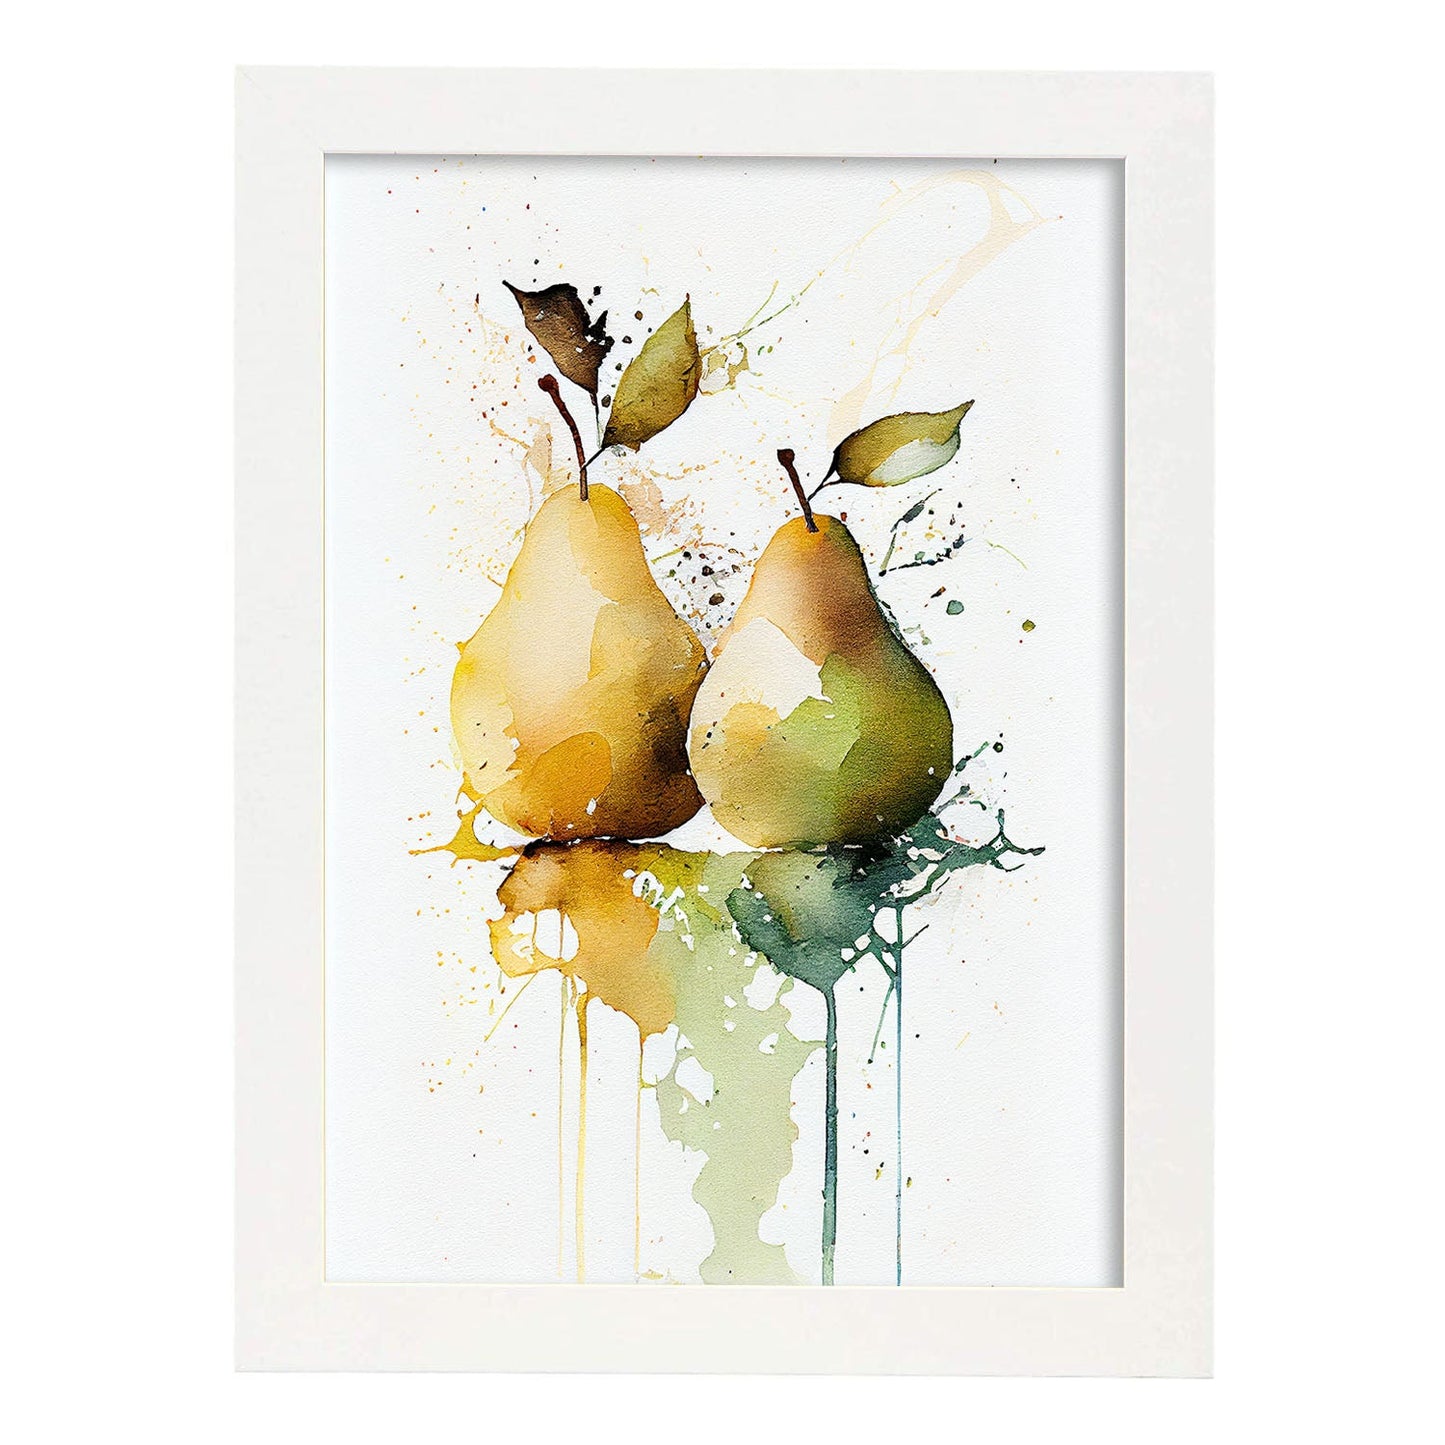 Nacnic minimalist Pears. Aesthetic Wall Art Prints for Bedroom or Living Room Design.-Artwork-Nacnic-A4-Marco Blanco-Nacnic Estudio SL